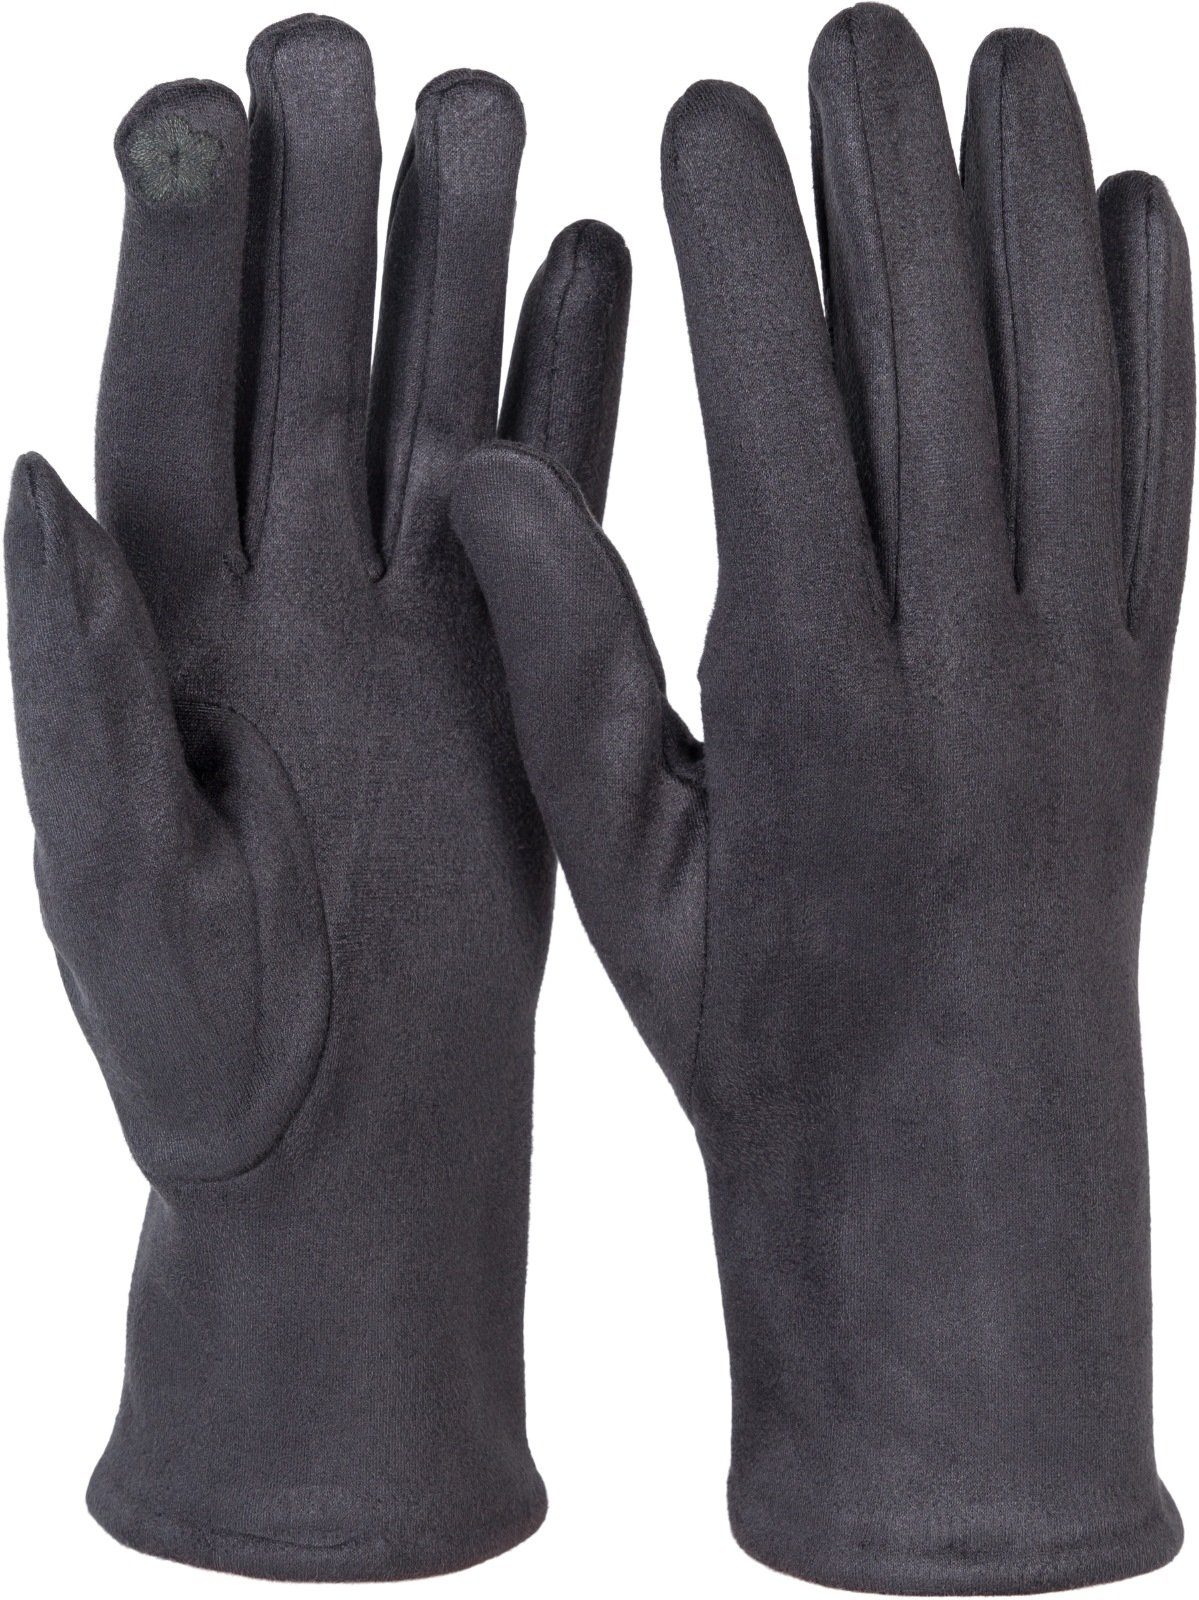 Ziernähte Handschuhe styleBREAKER Touchscreen Fleecehandschuhe Einfarbige